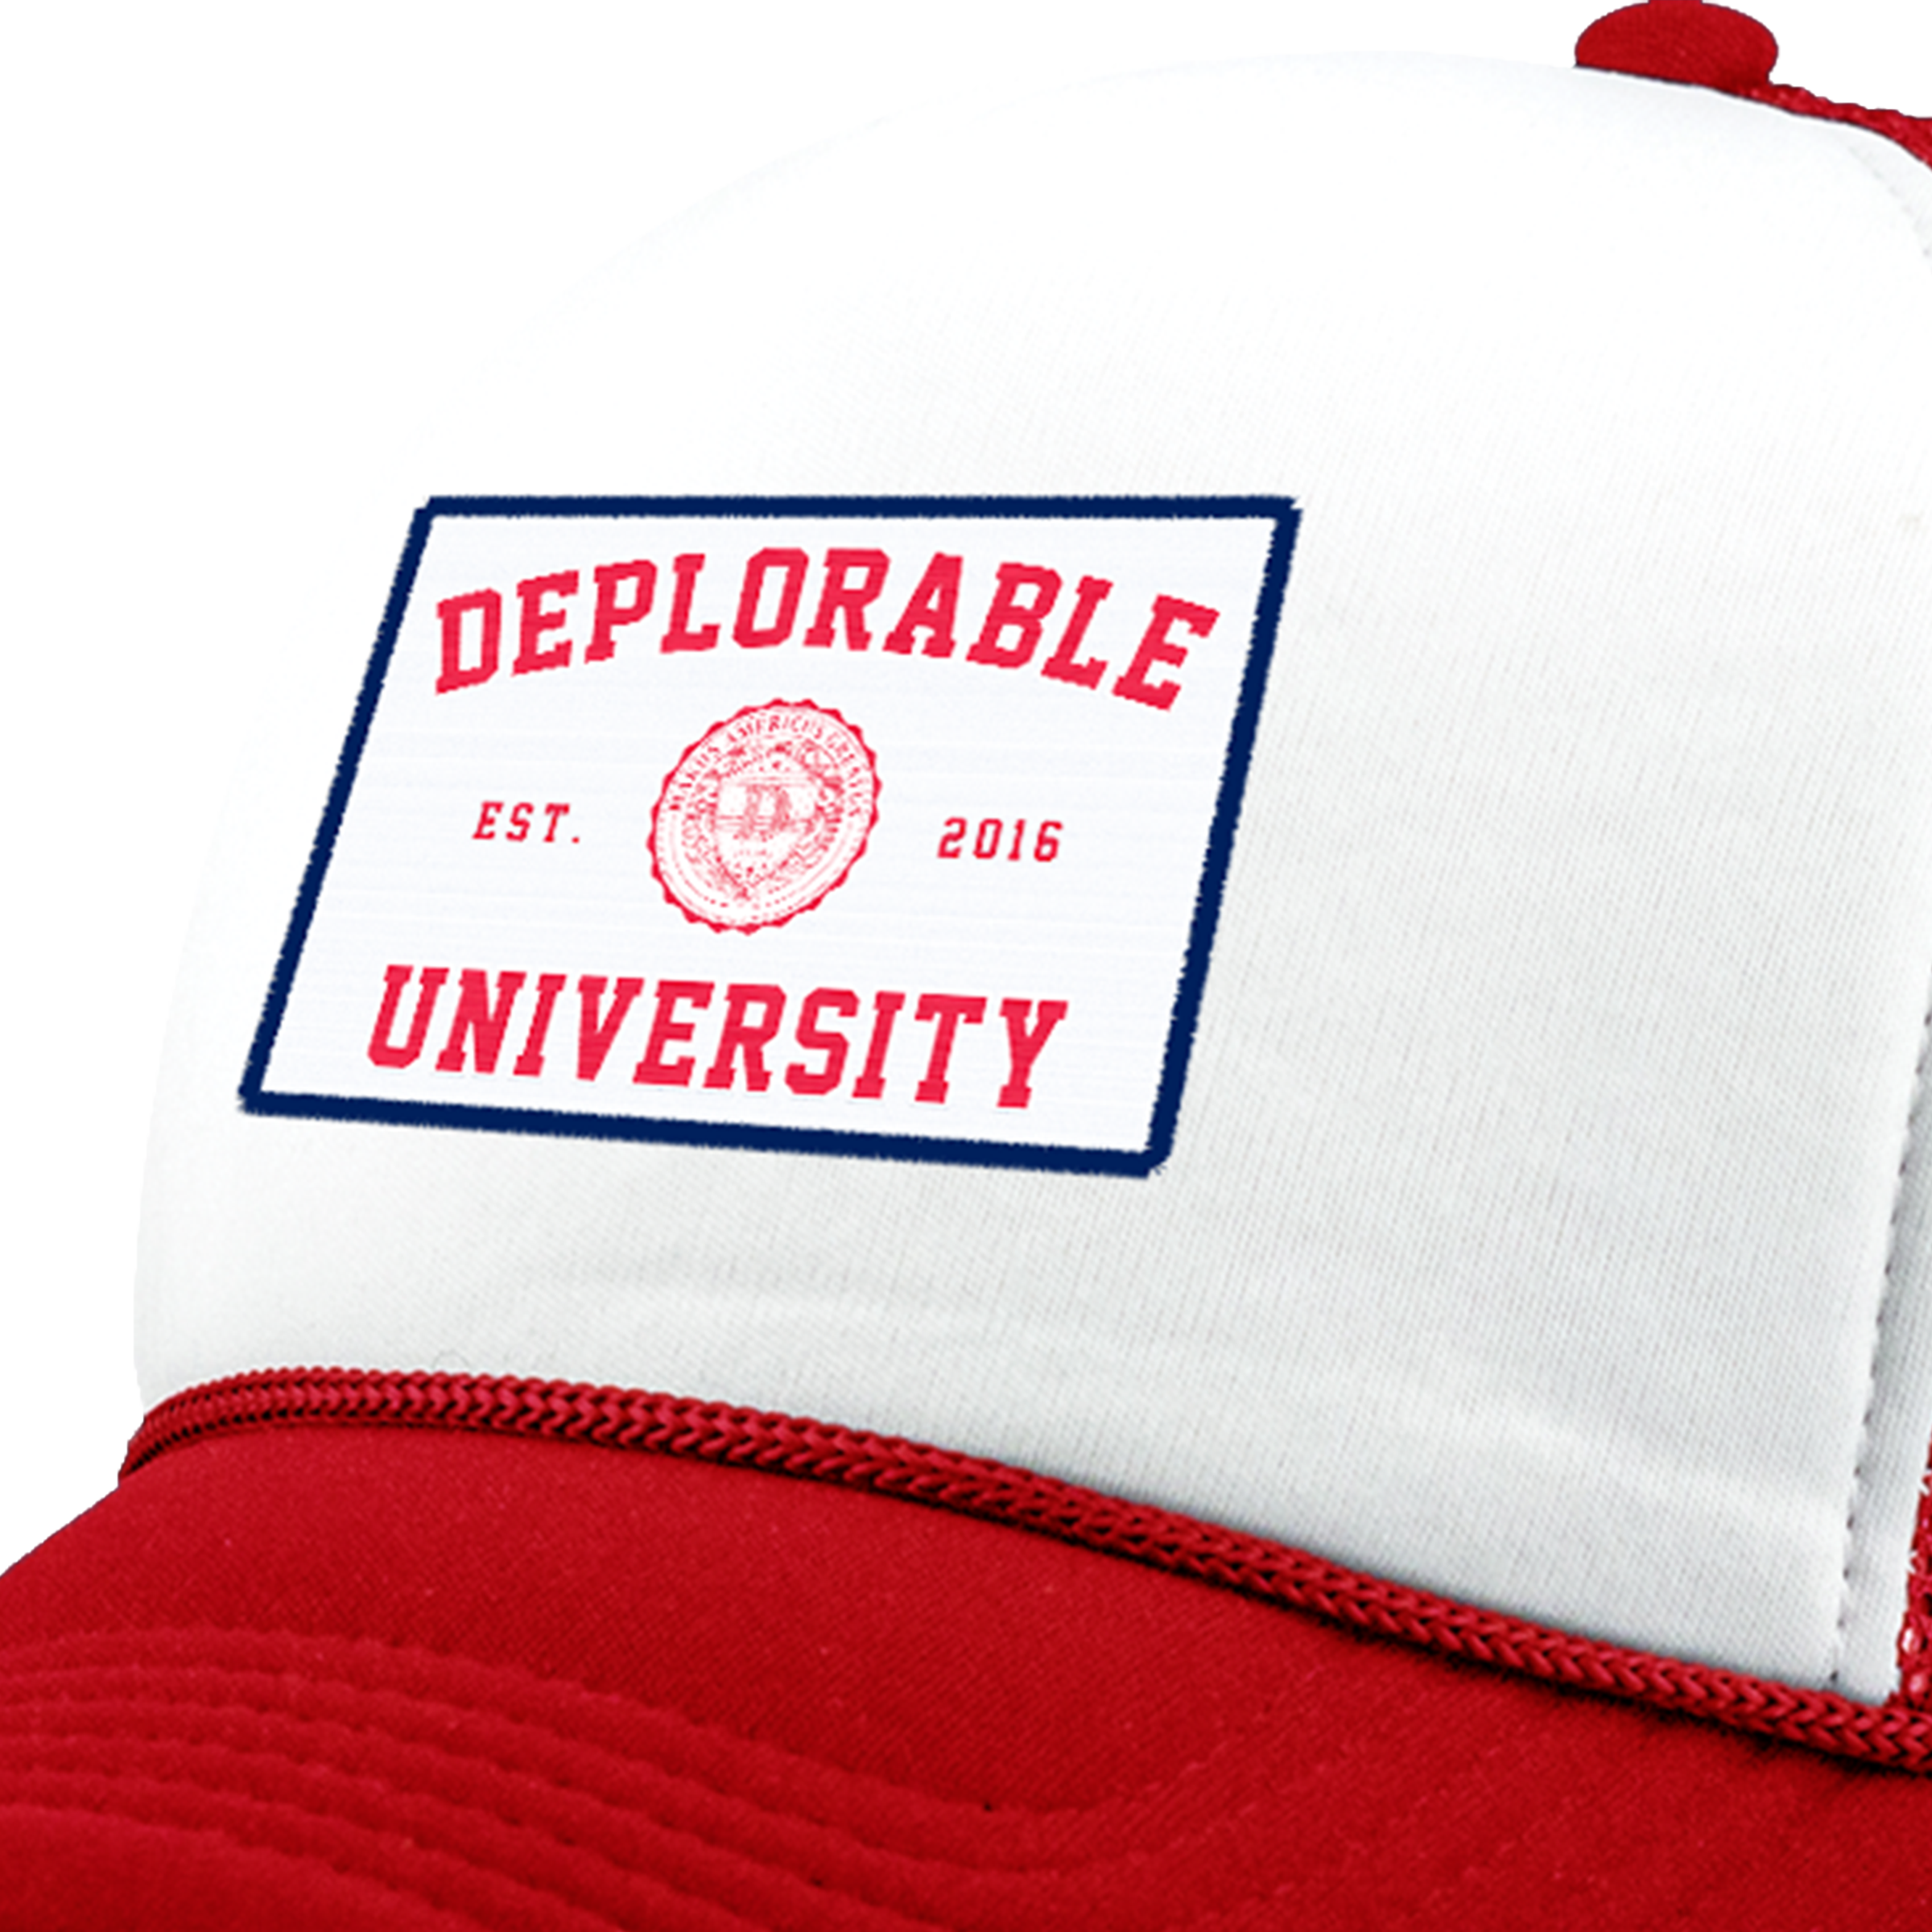 Deplorable University Hat - Red